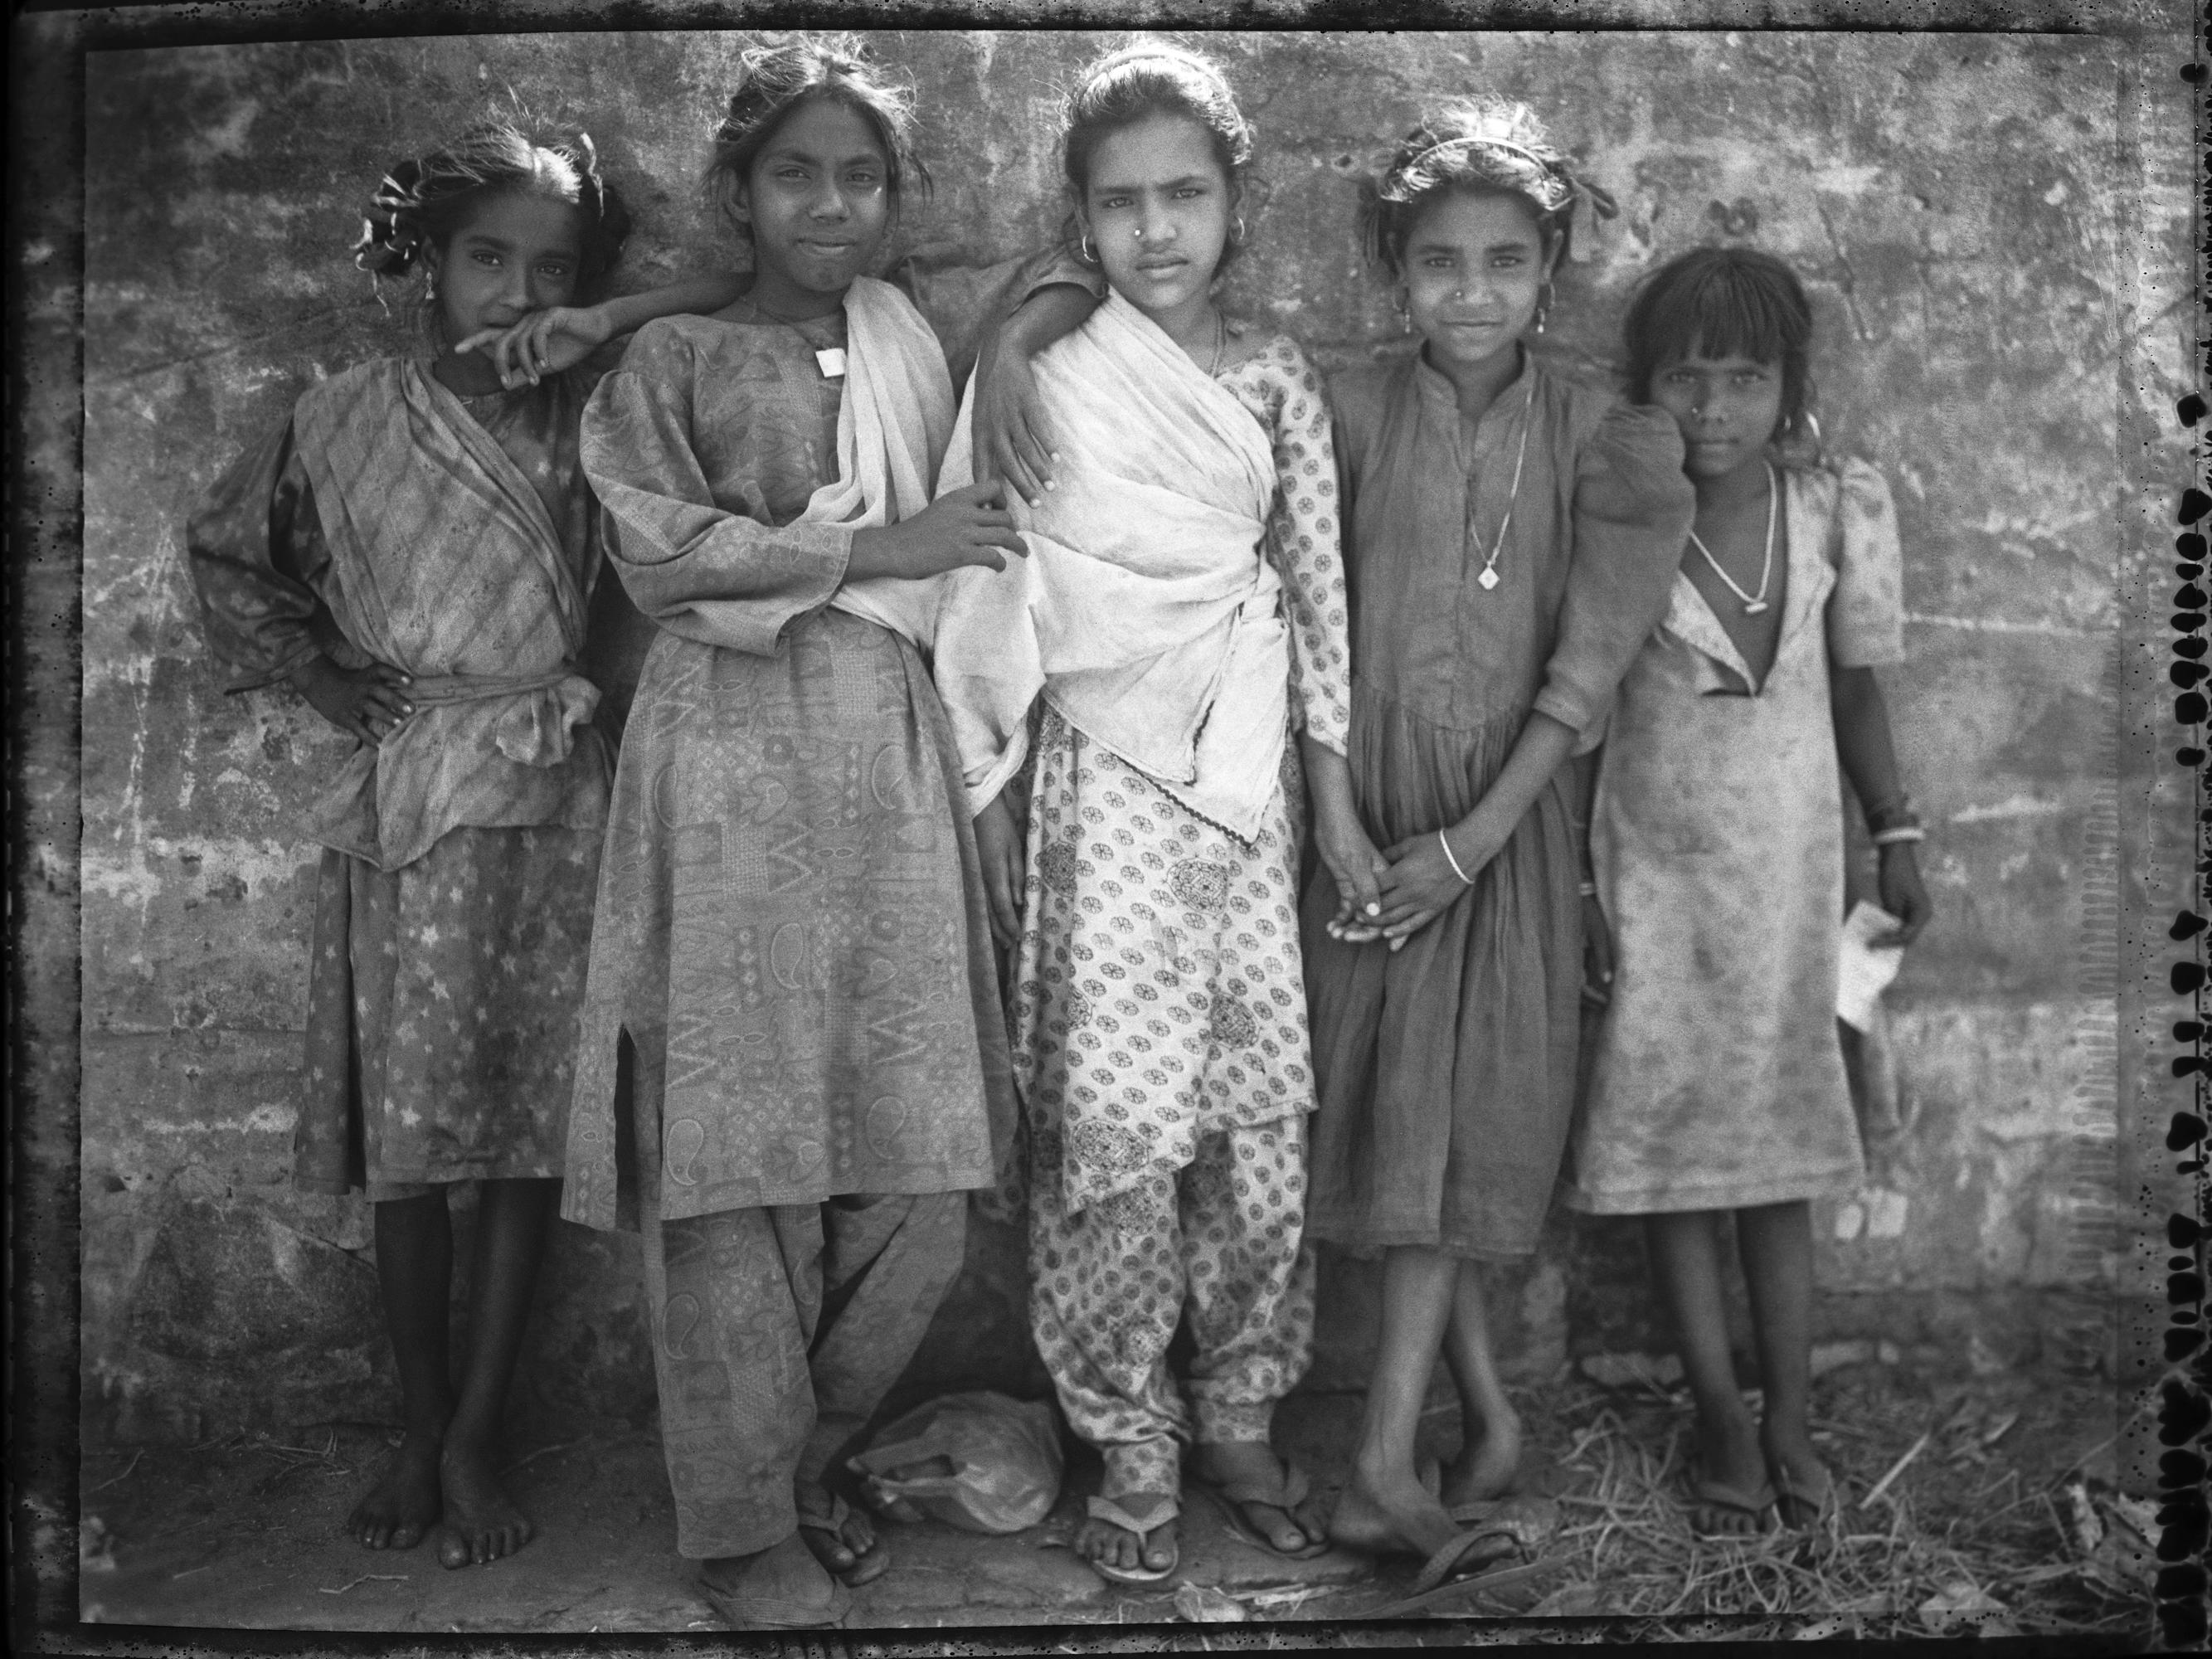 Carlo Bevilacqua Portrait Photograph - Five Standing Indian Children  Rajastan - India - ( from  Indian Stills series )